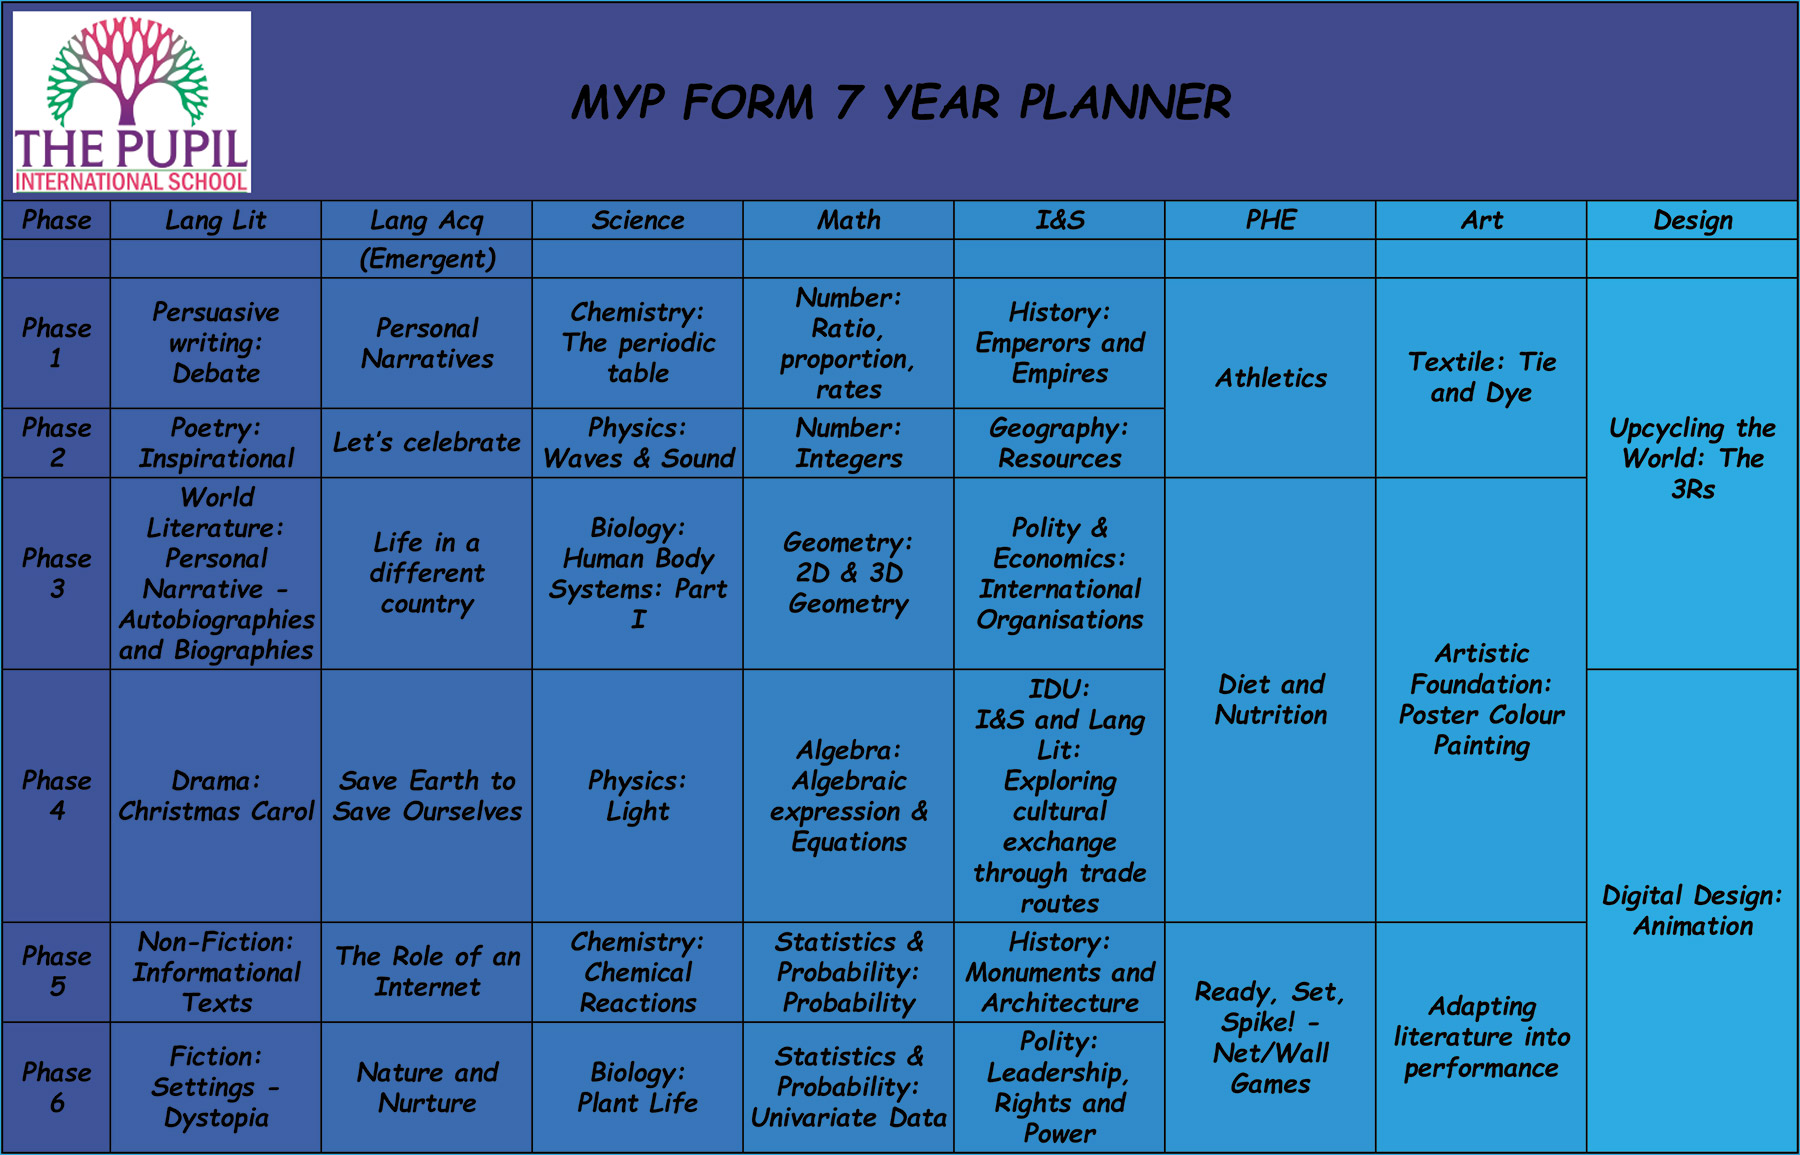 MYP FORM 7 YEAR PLANNER